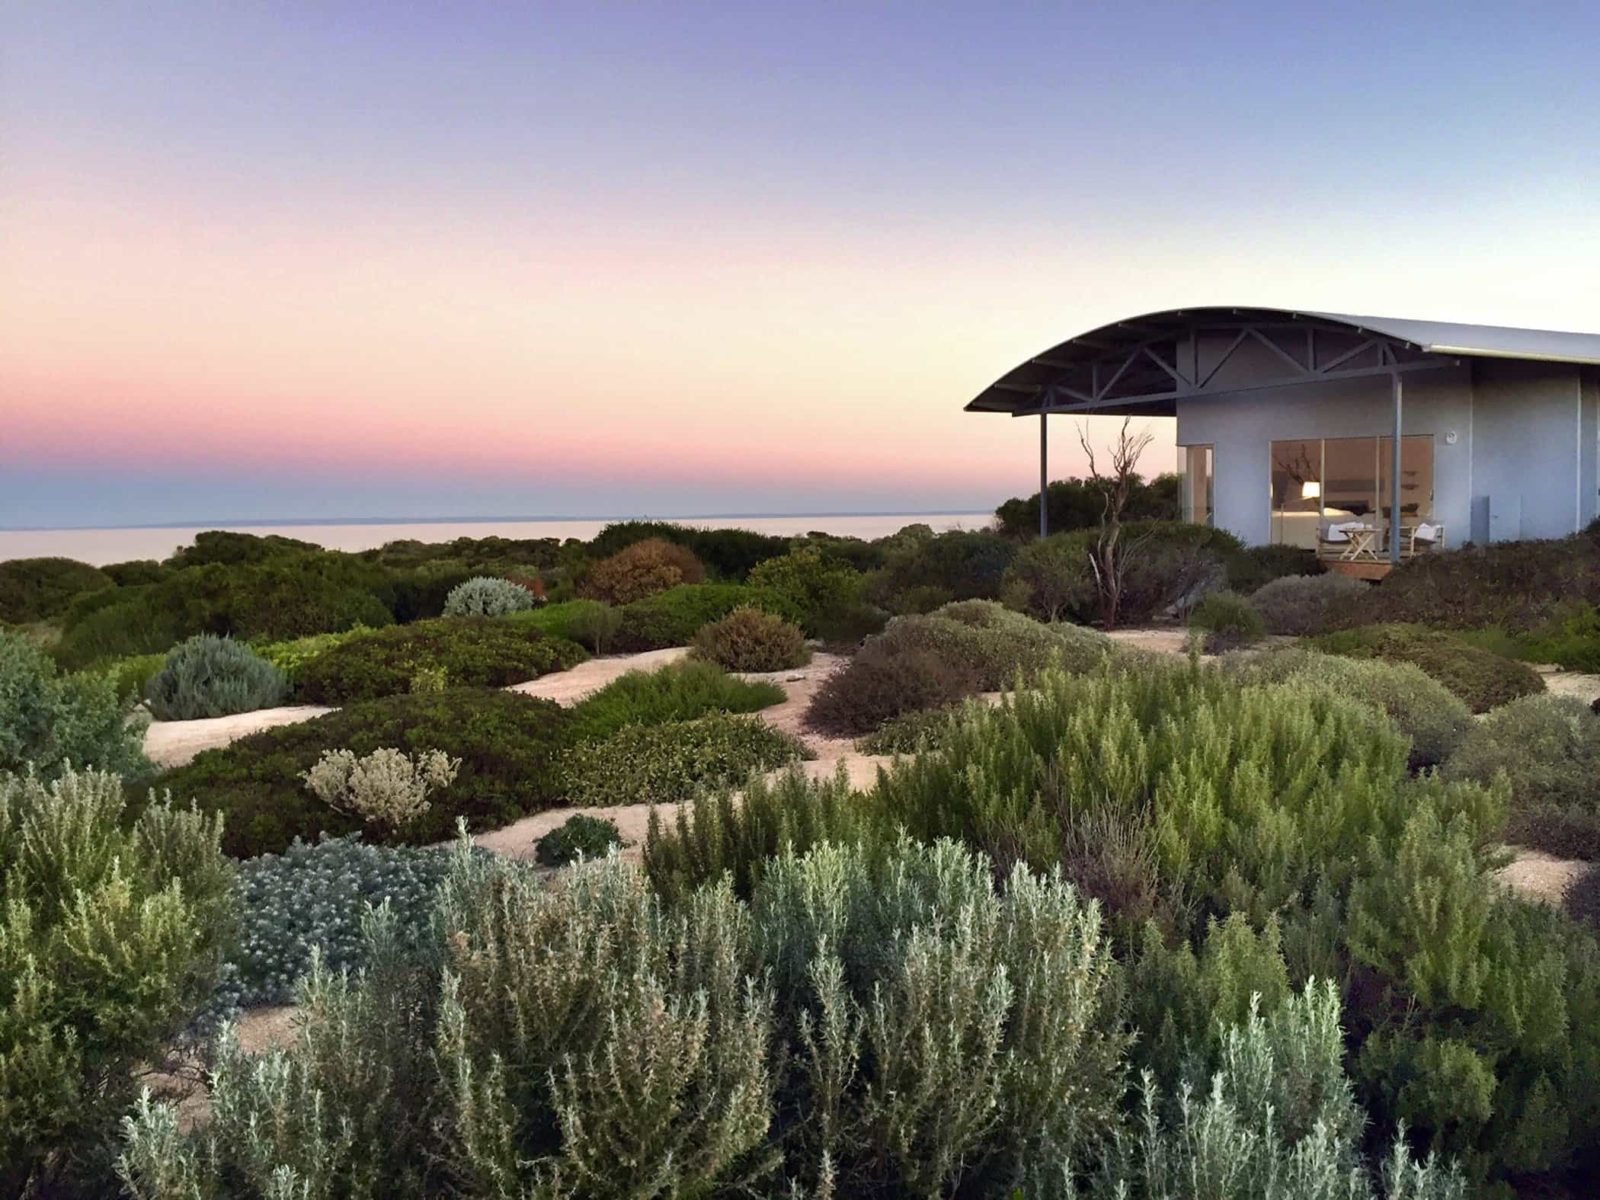 Yondah Beach House on beautiful Yorke Peninsula in South Australia